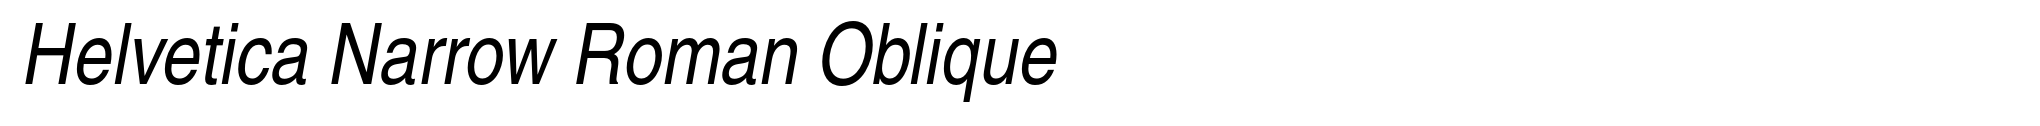 Helvetica Narrow Roman Oblique image